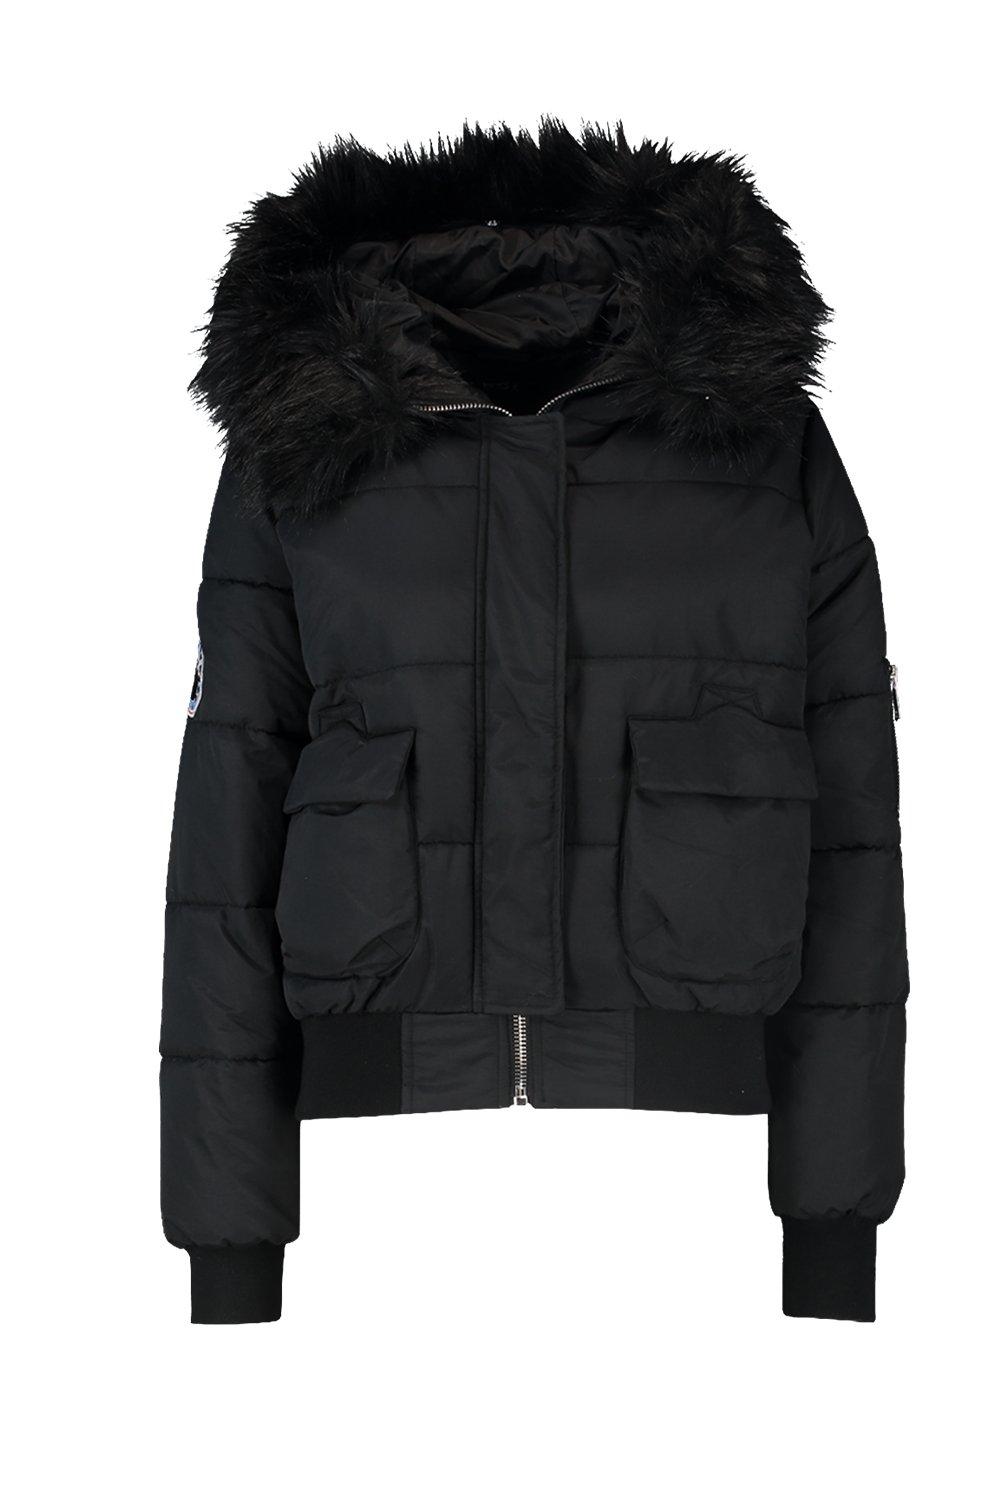 black jacket faux fur hood